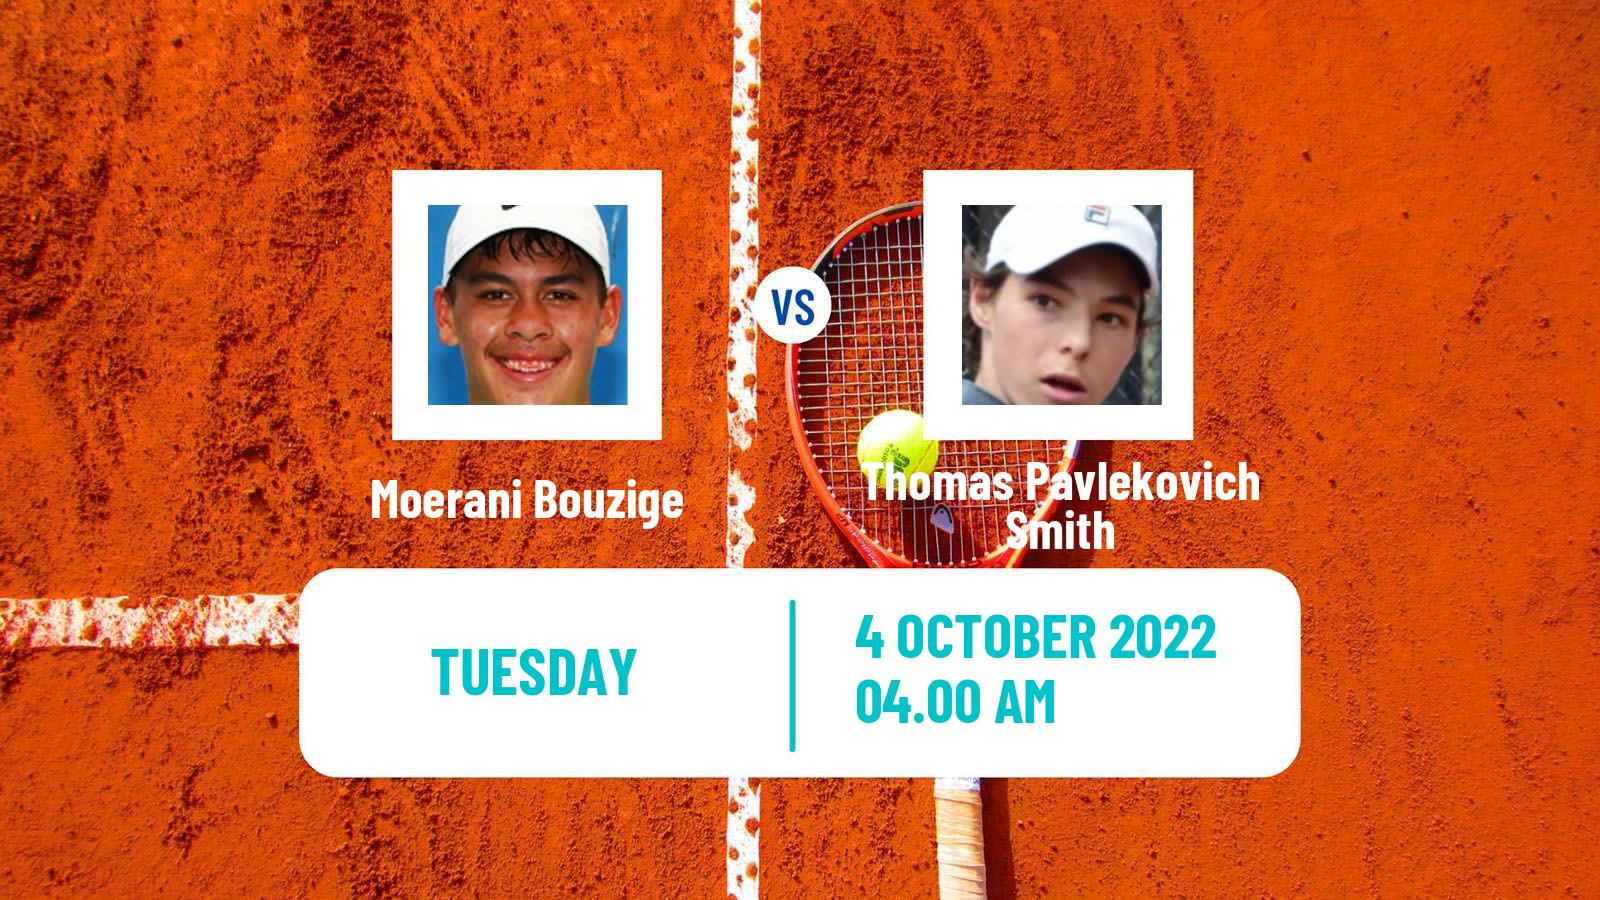 Tennis ITF Tournaments Moerani Bouzige - Thomas Pavlekovich Smith